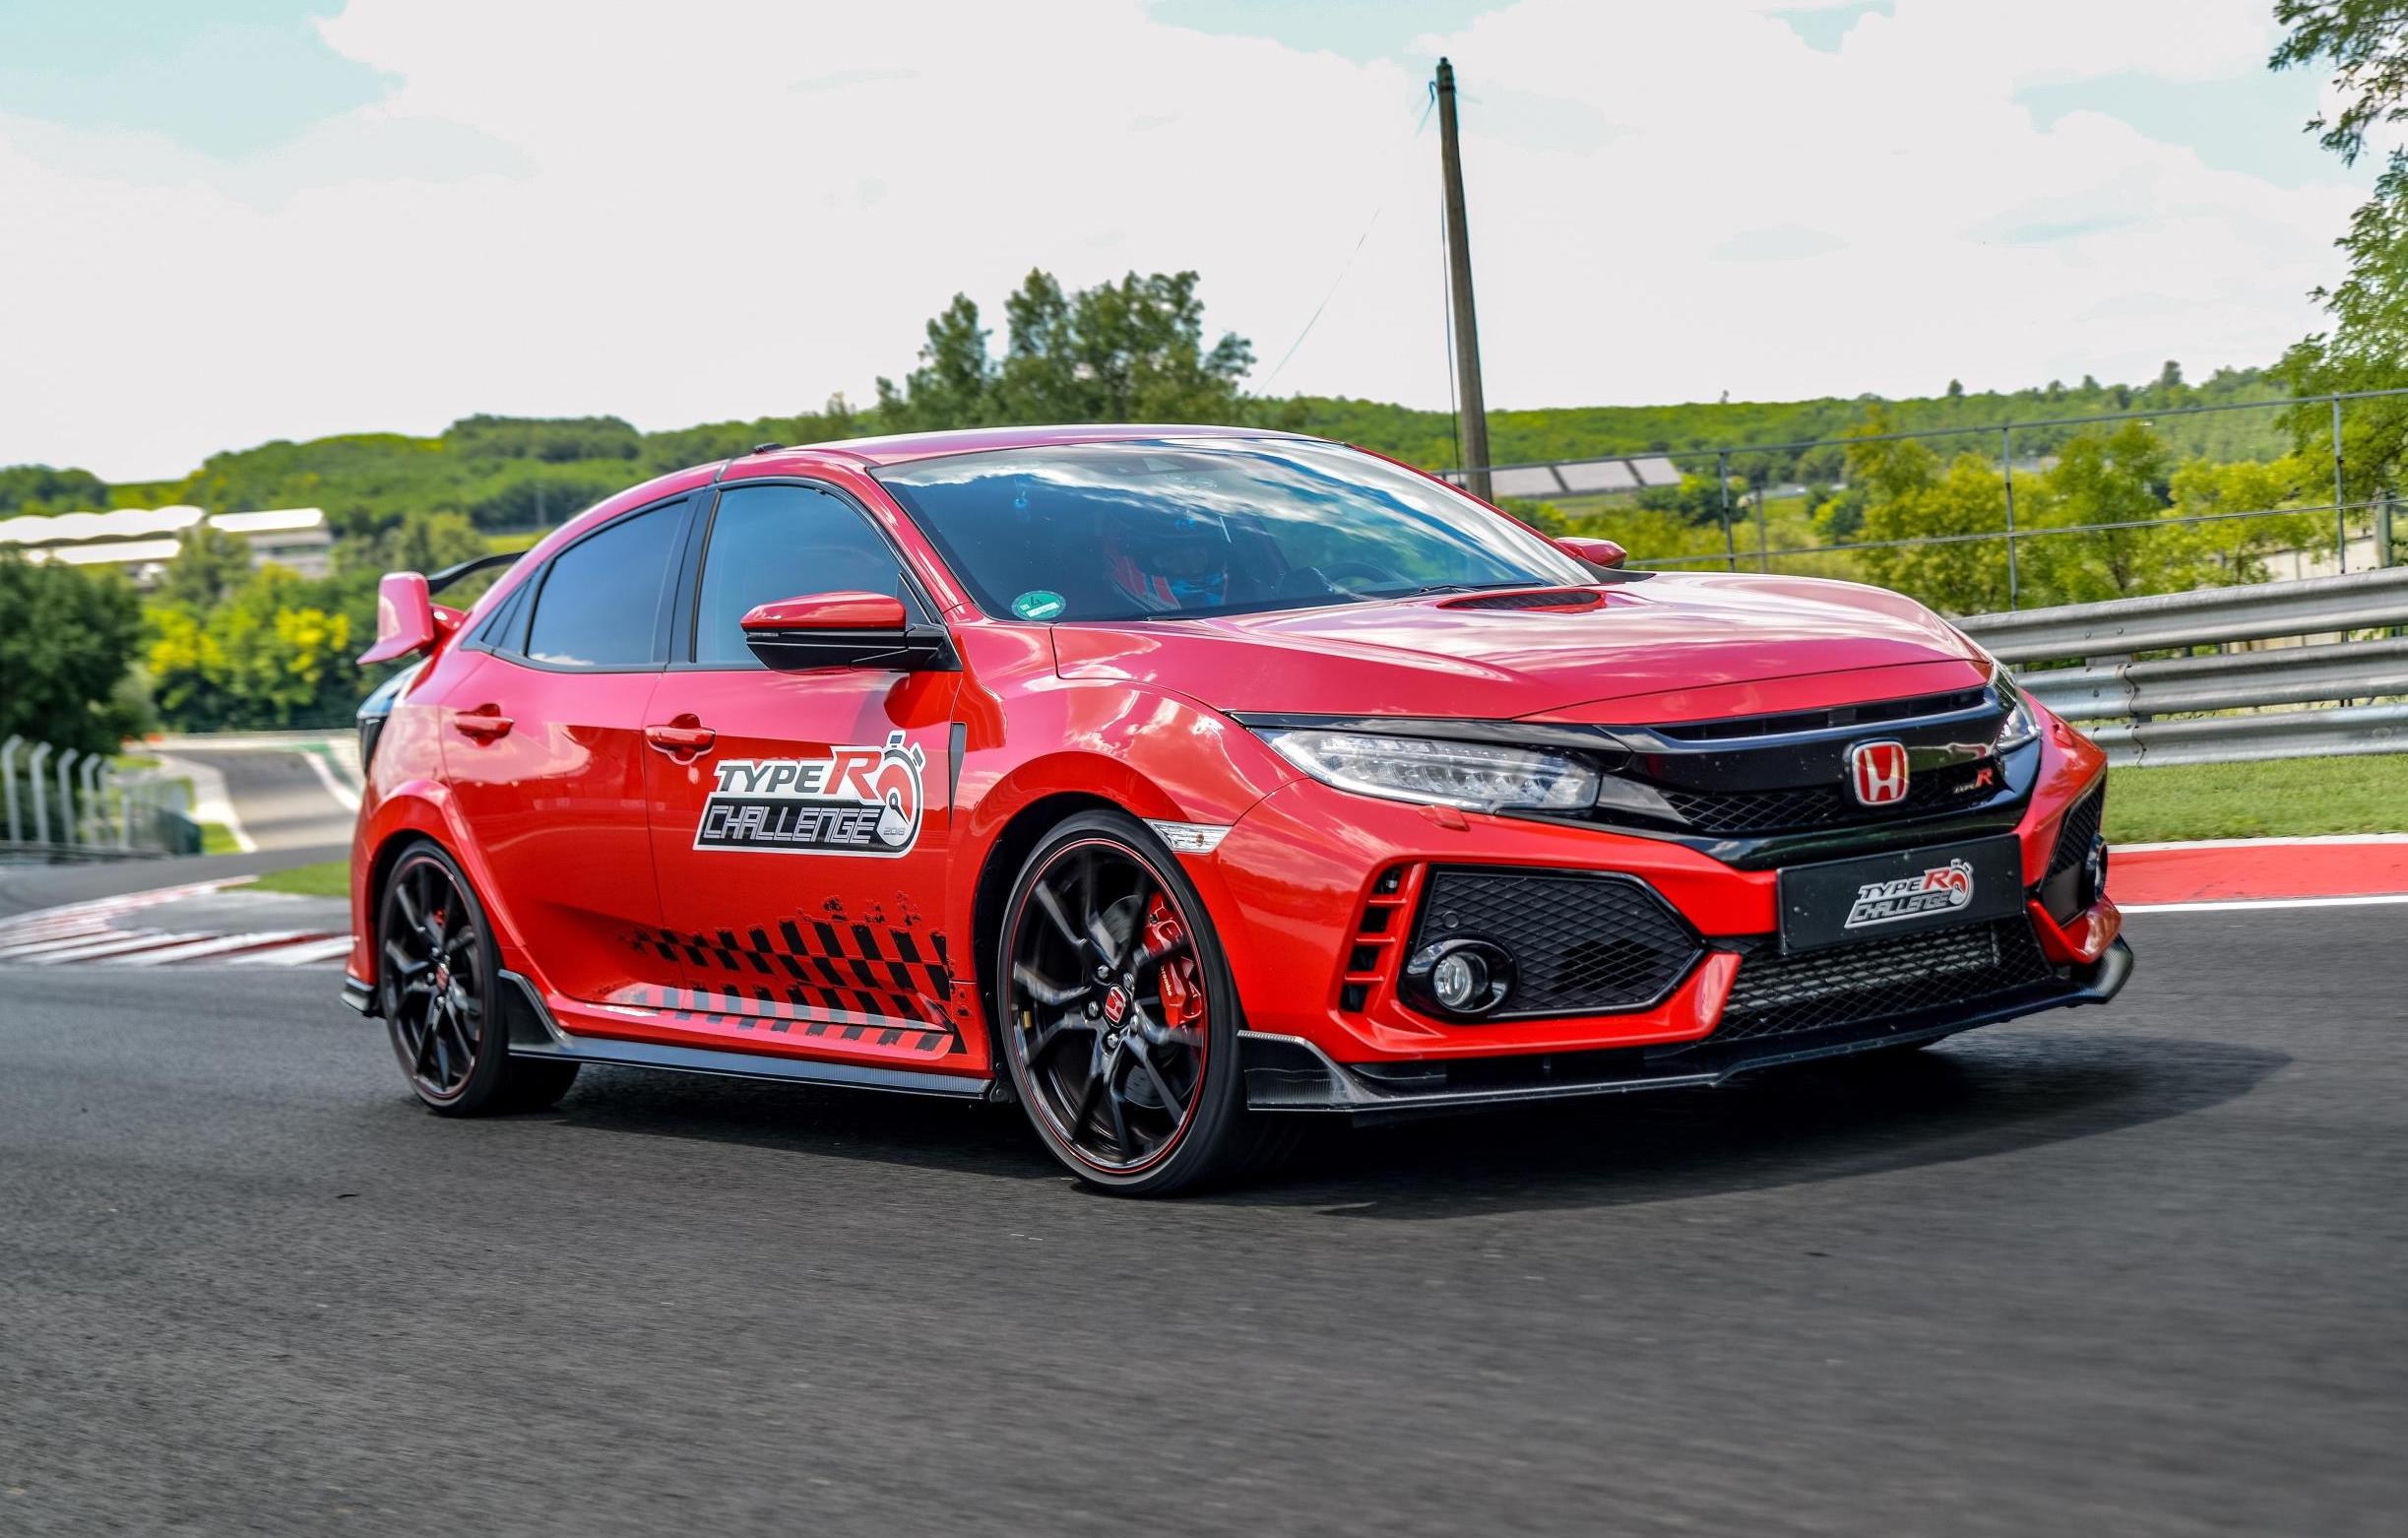 Honda Civic Type R sets Hungaroring FWD lap record (video)